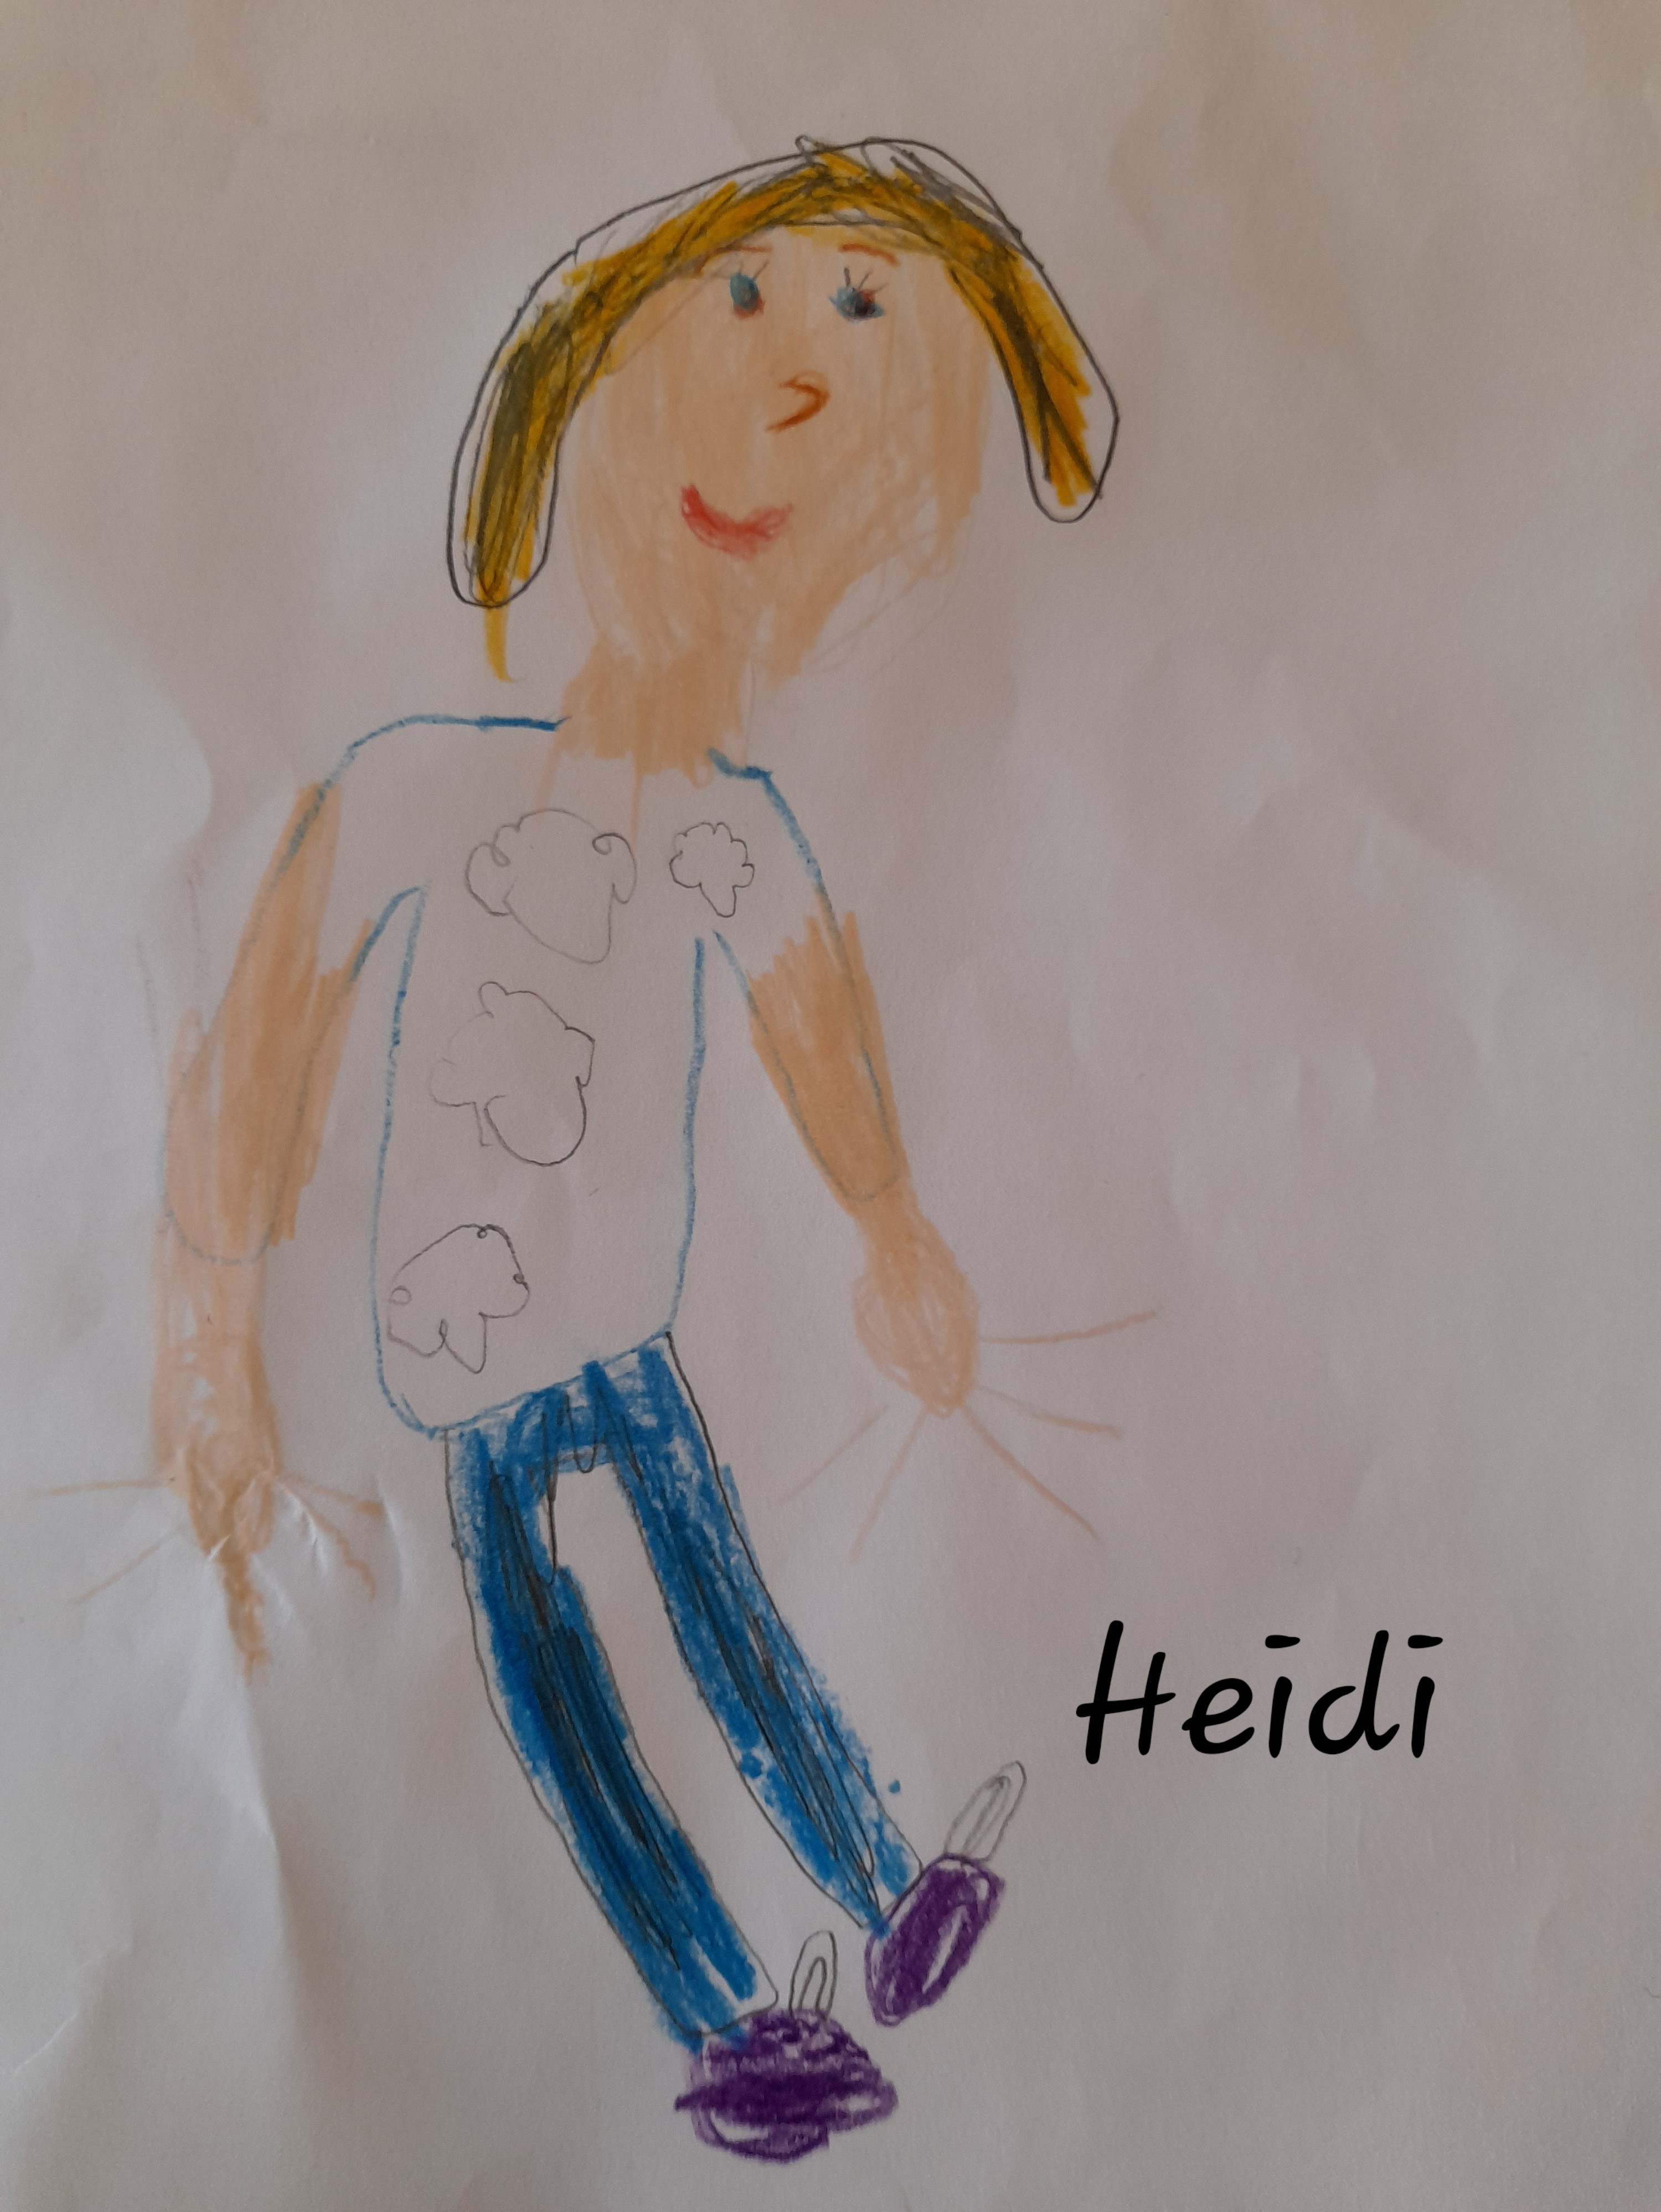 Kinderpflegerin Heidi